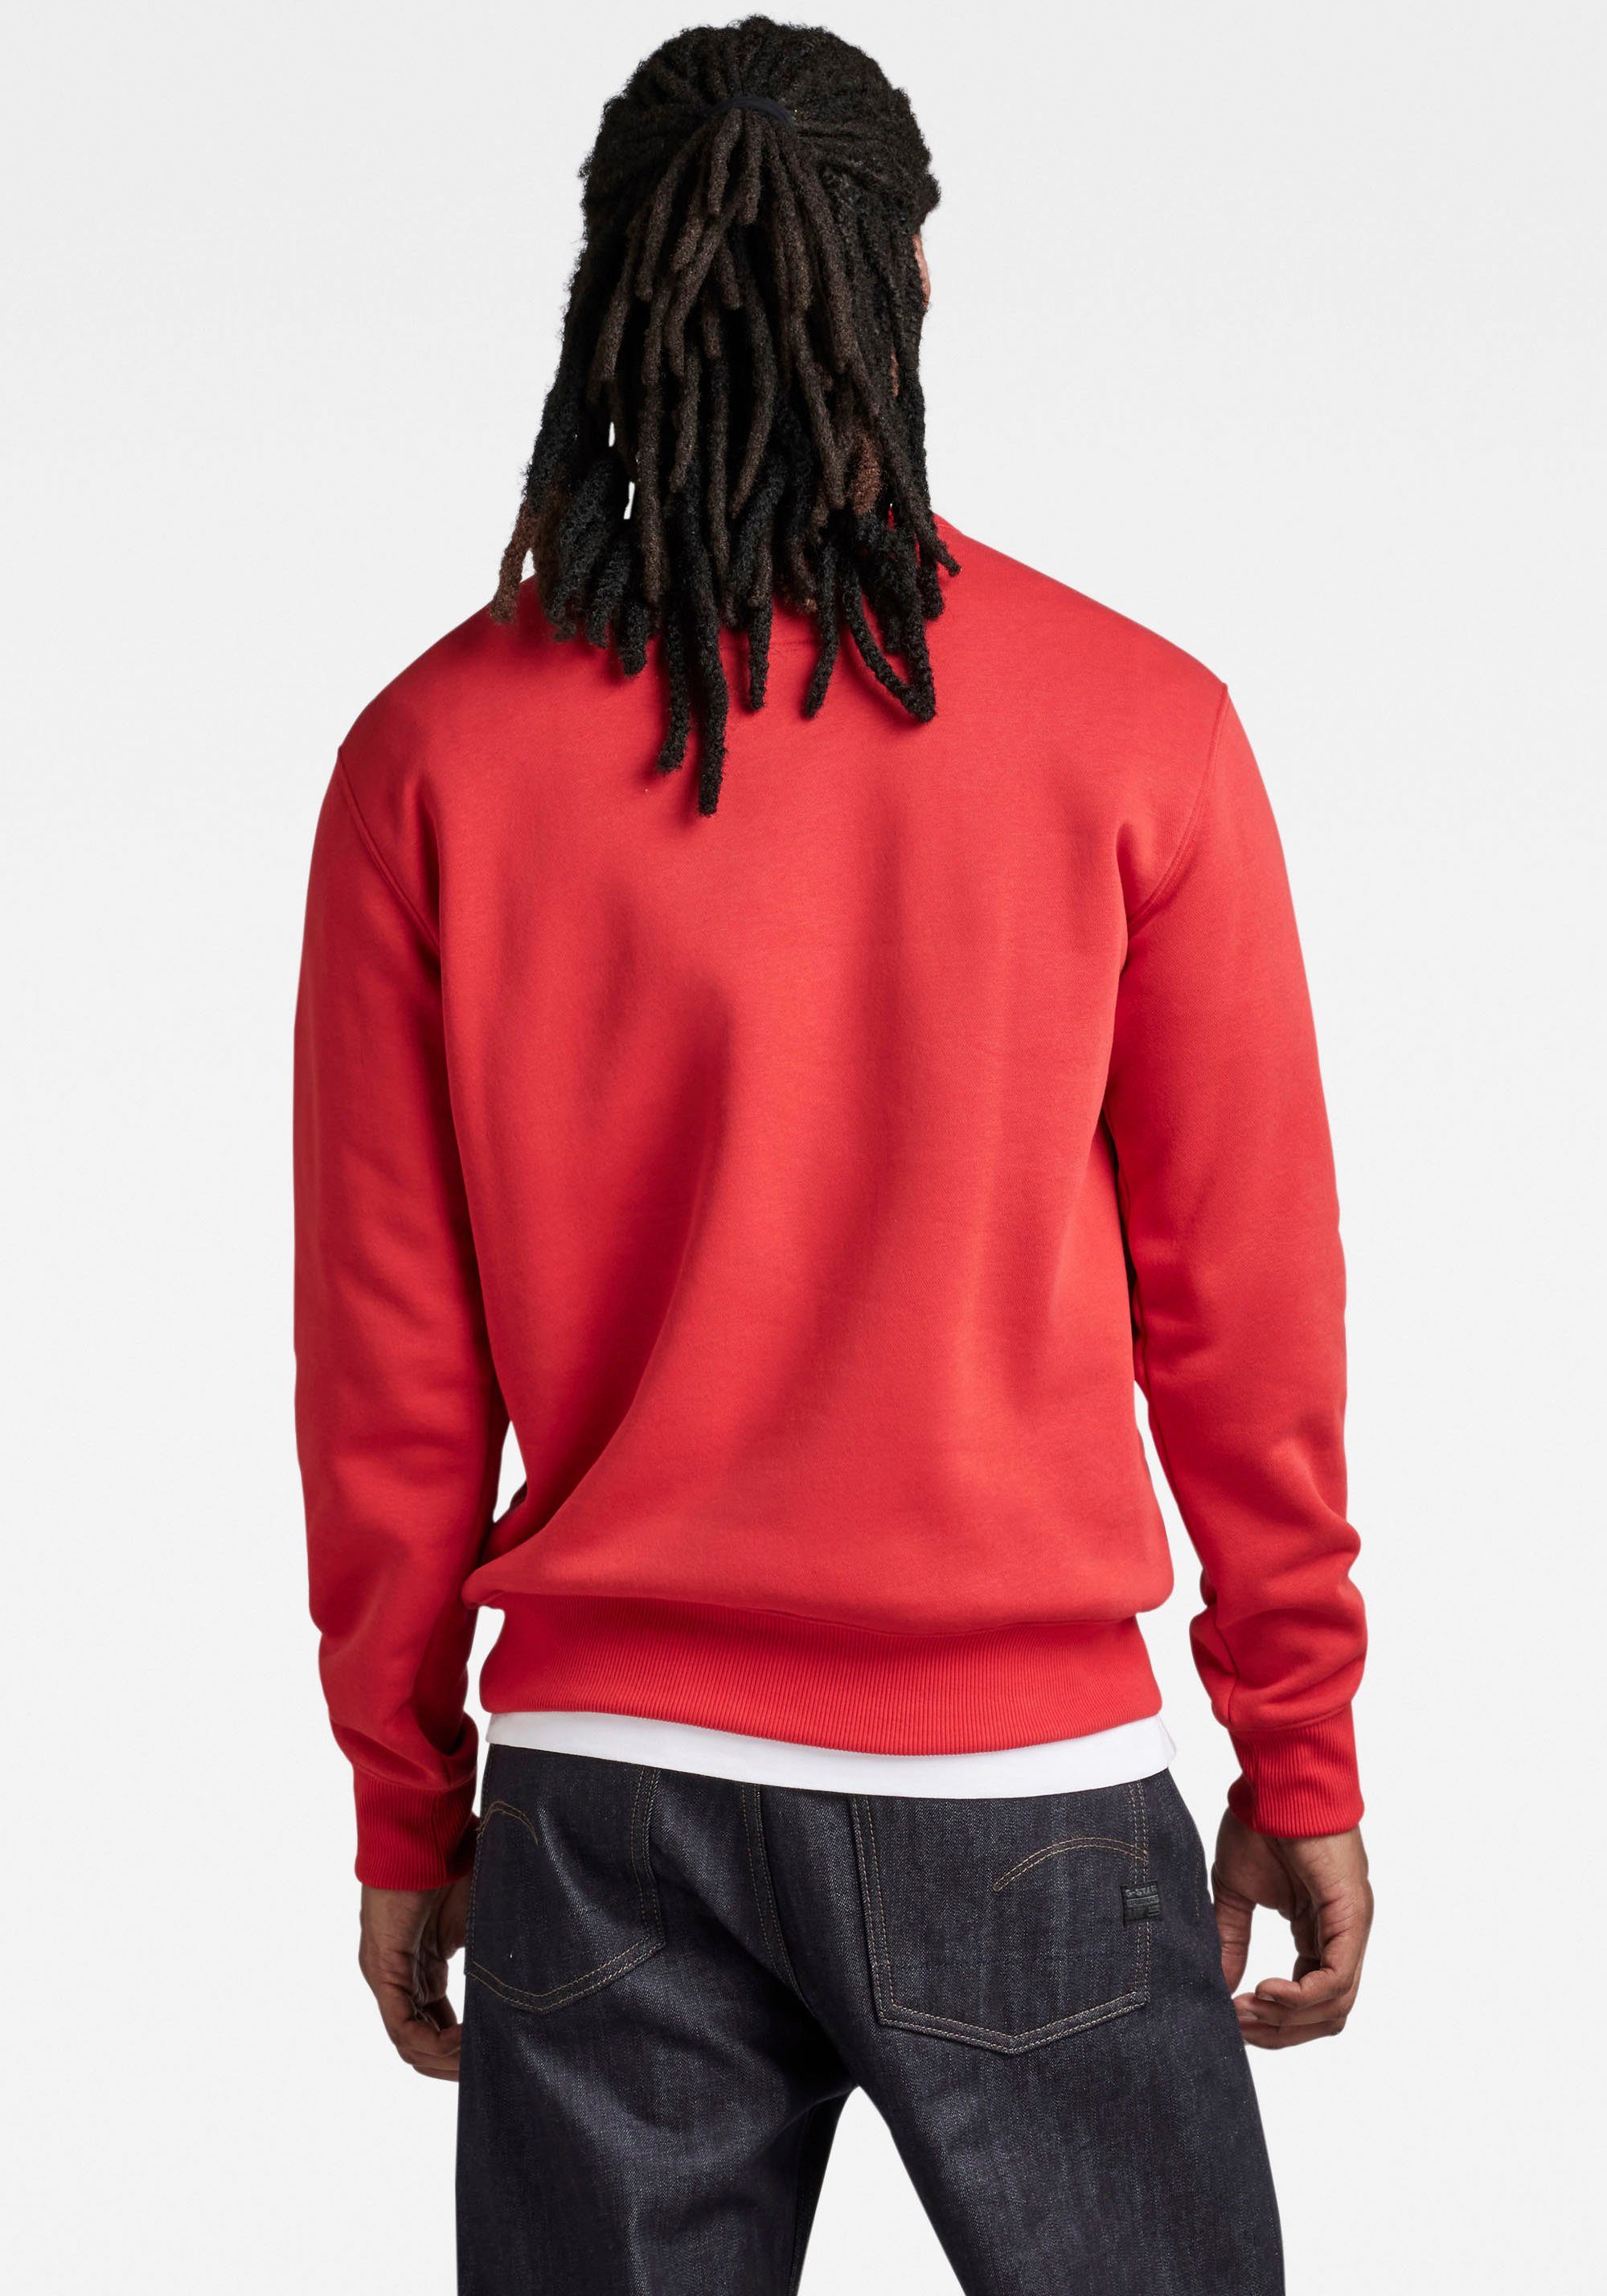 RAW Acid G-Star Red Sweatshirt Originals Sweatshirt